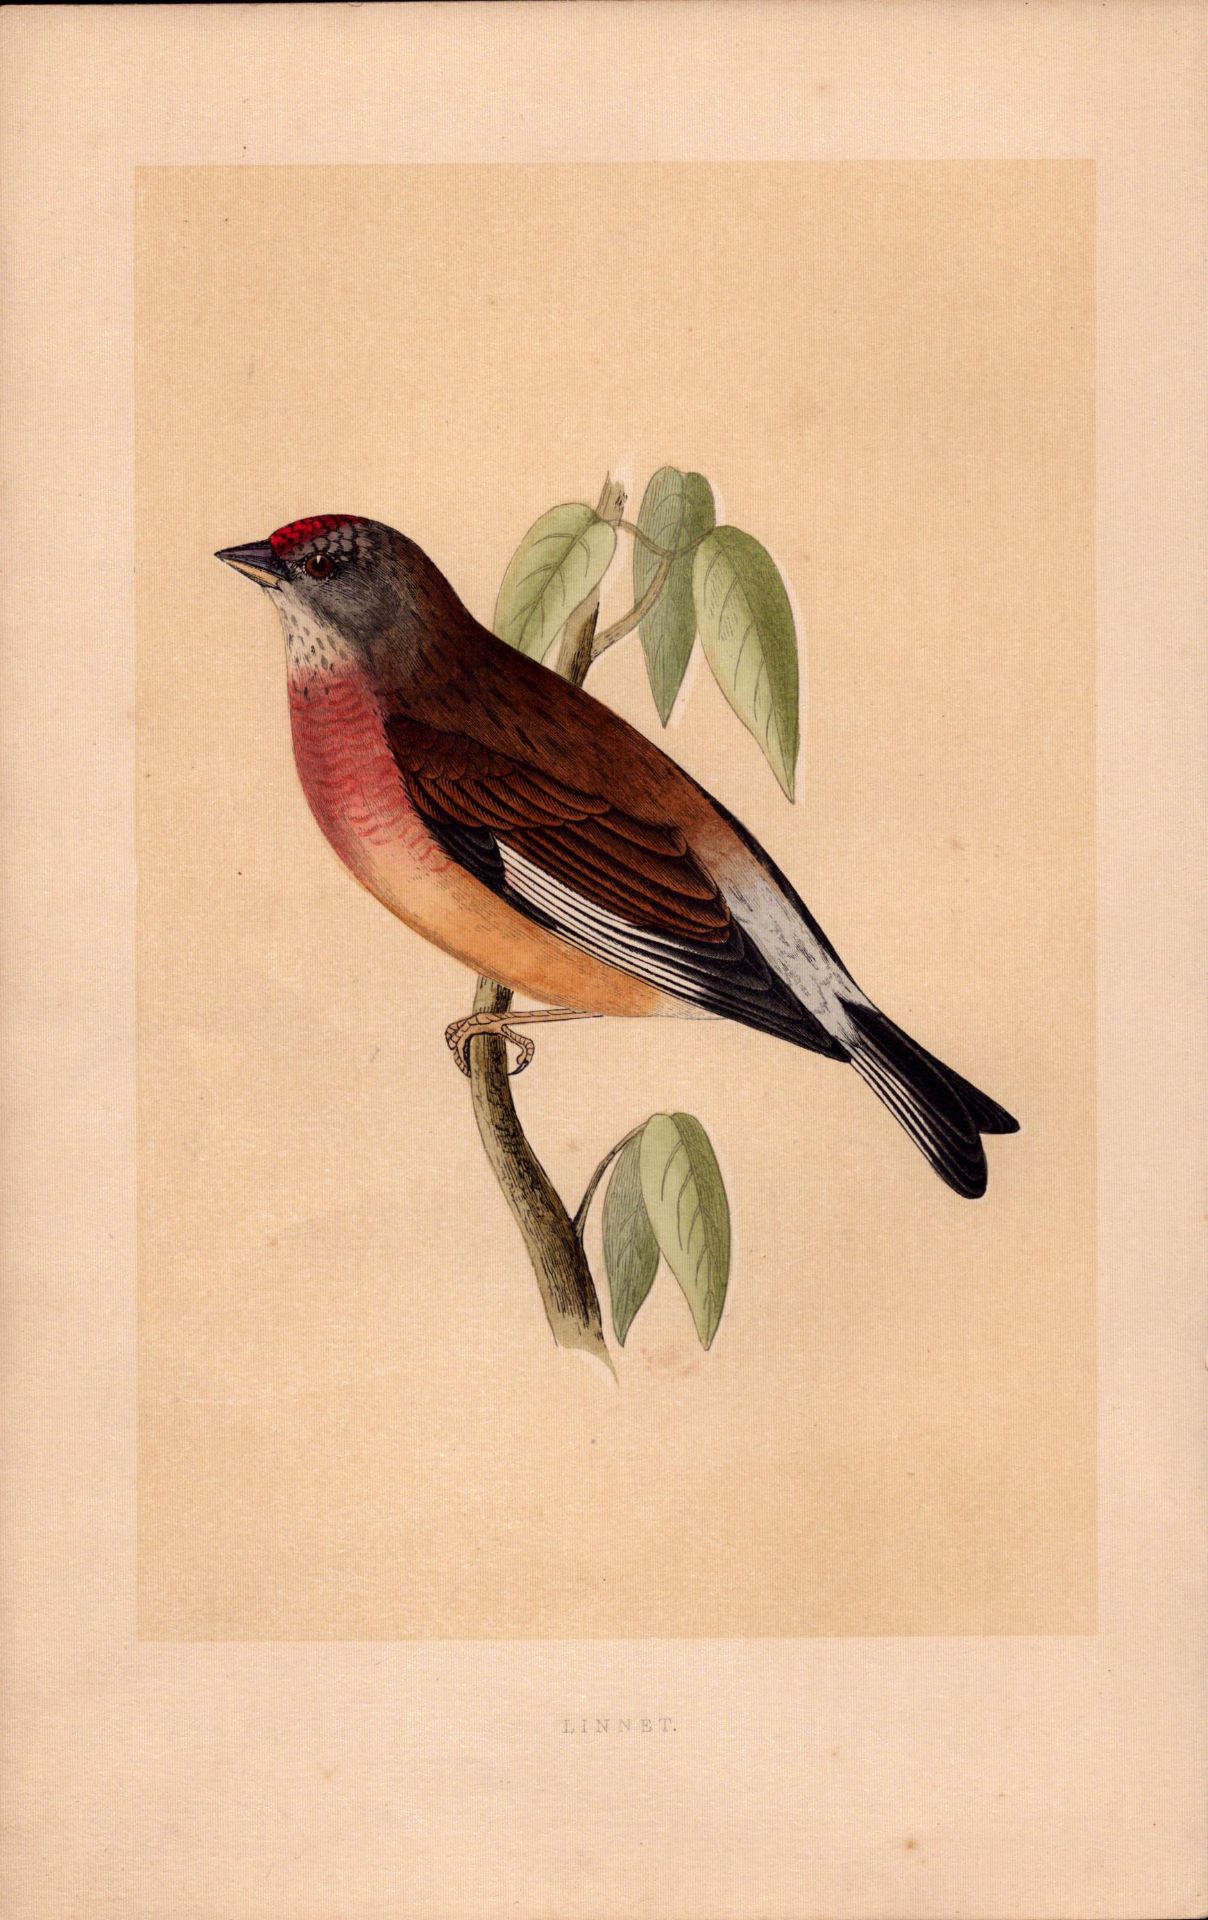 Linnet Rev Morris Antique History of British Birds Engraving.